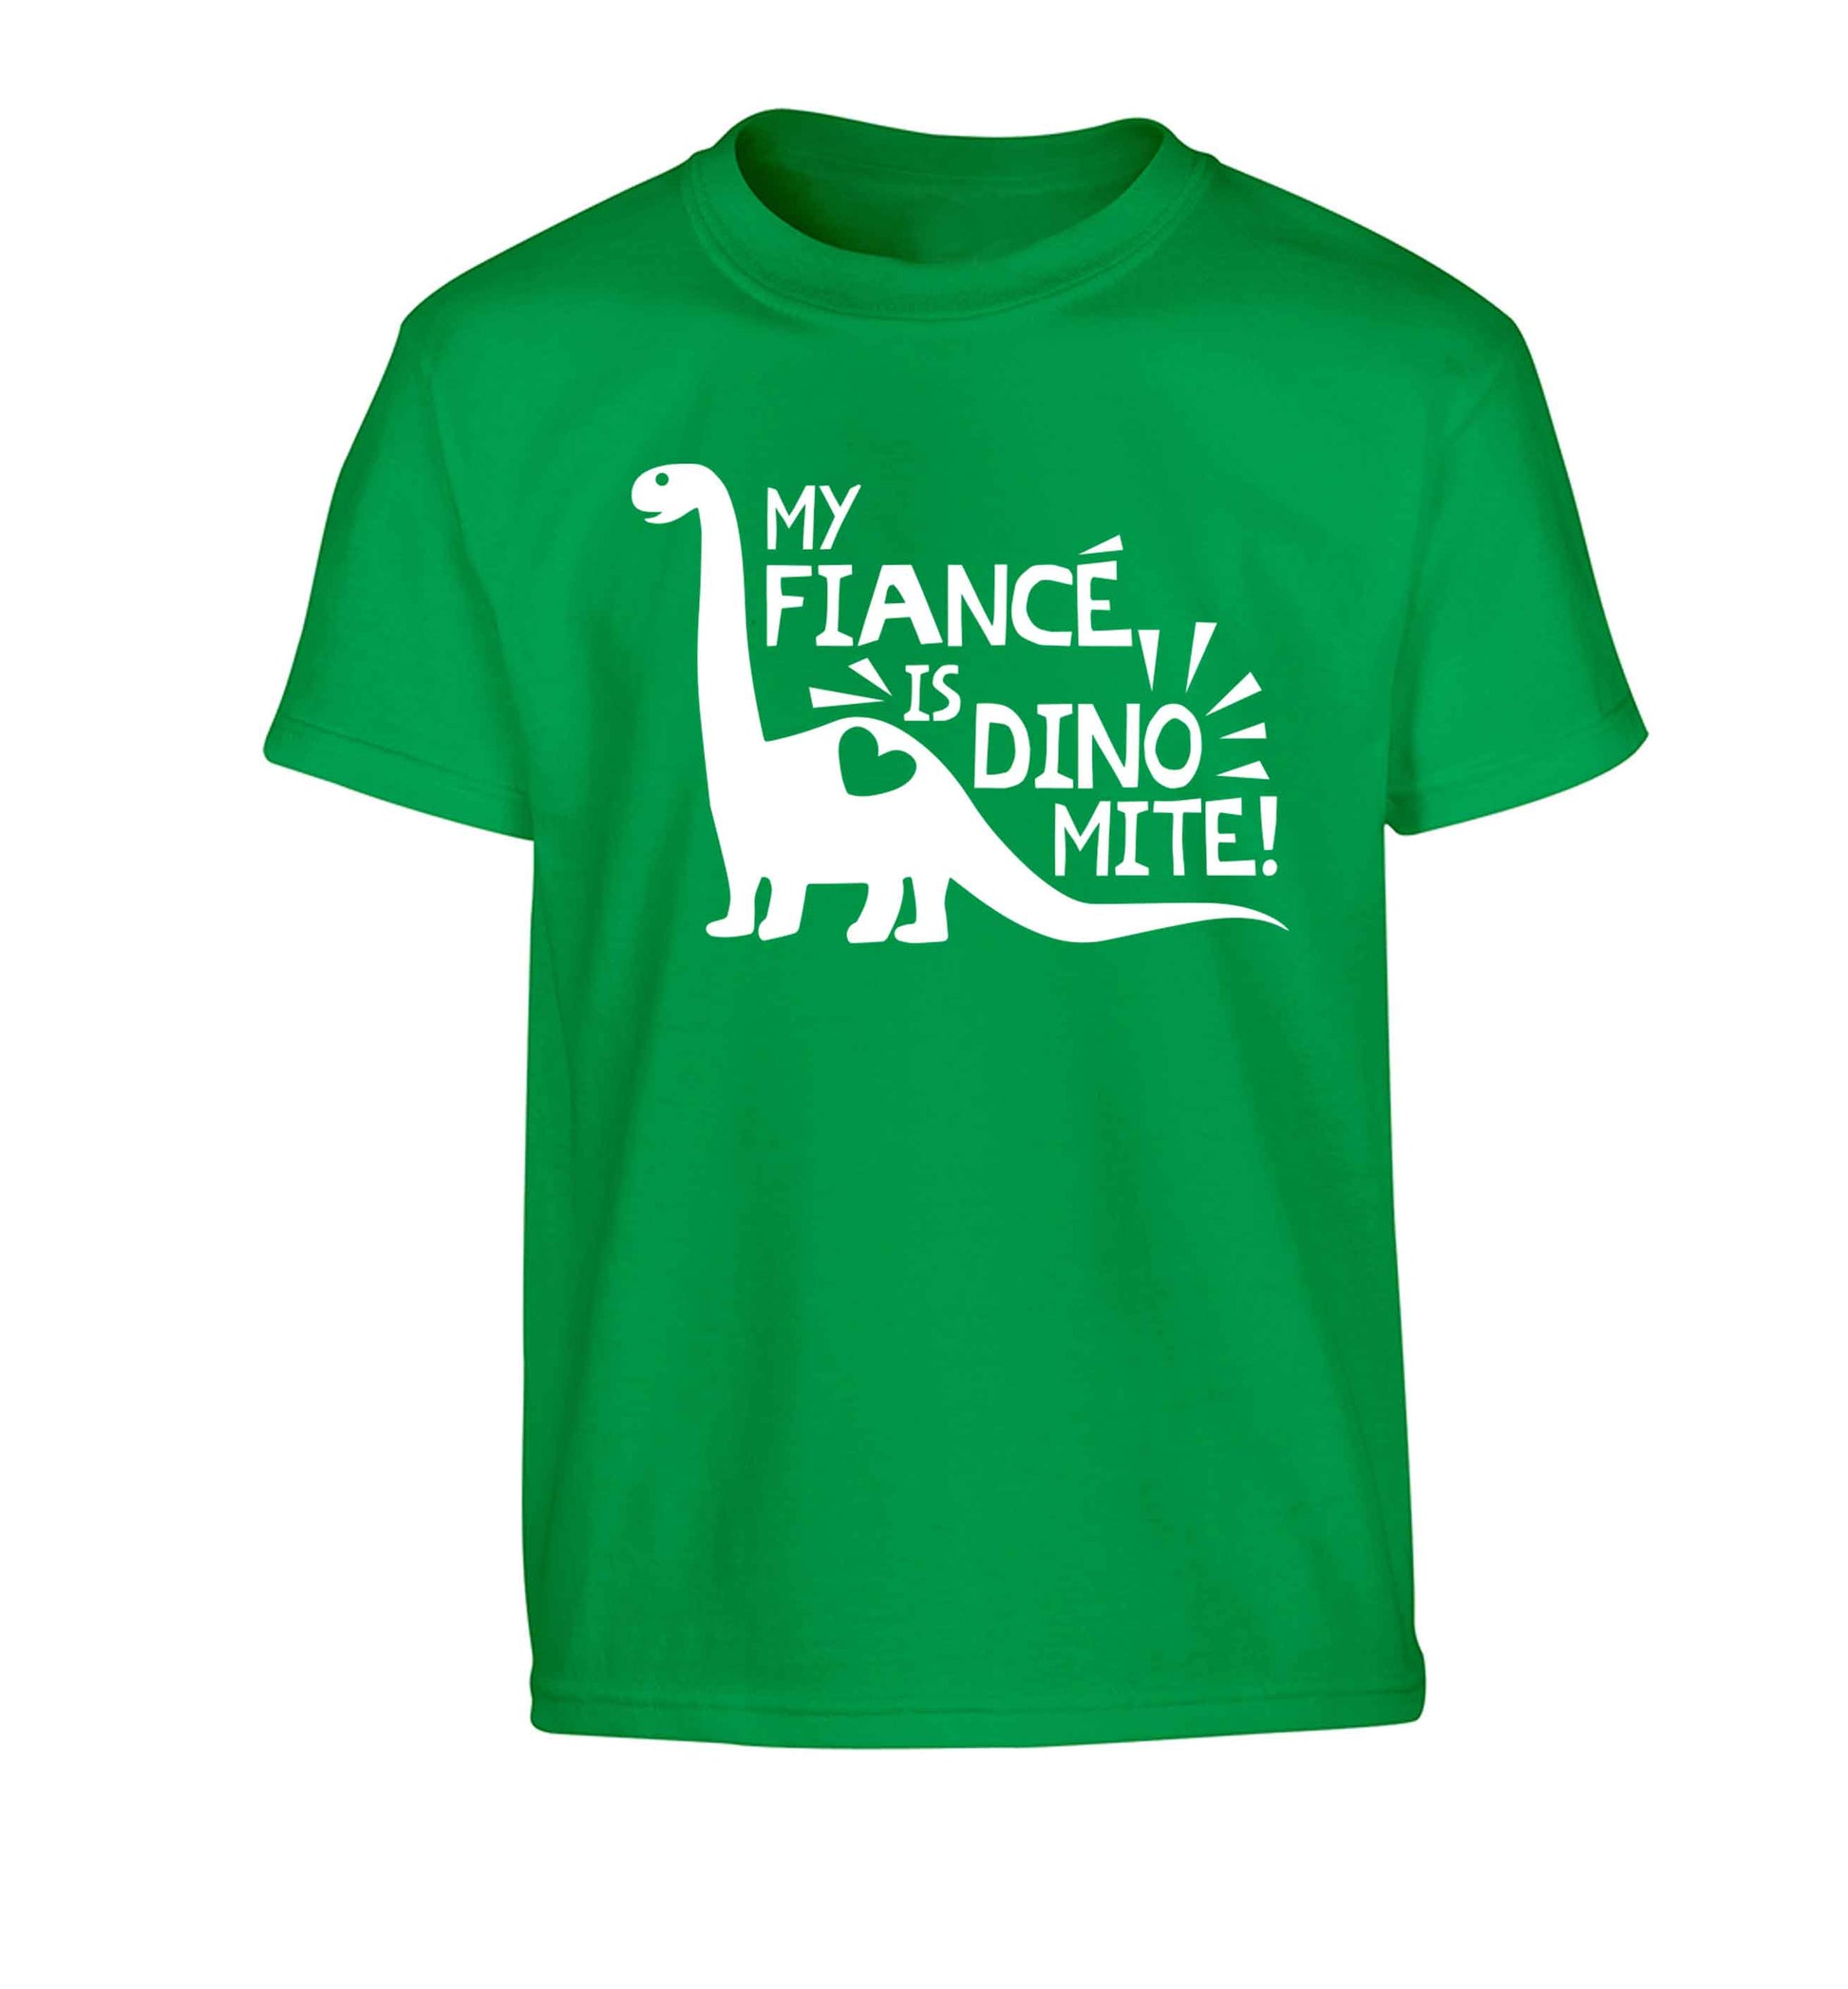 My fiance is dinomite! Children's green Tshirt 12-13 Years